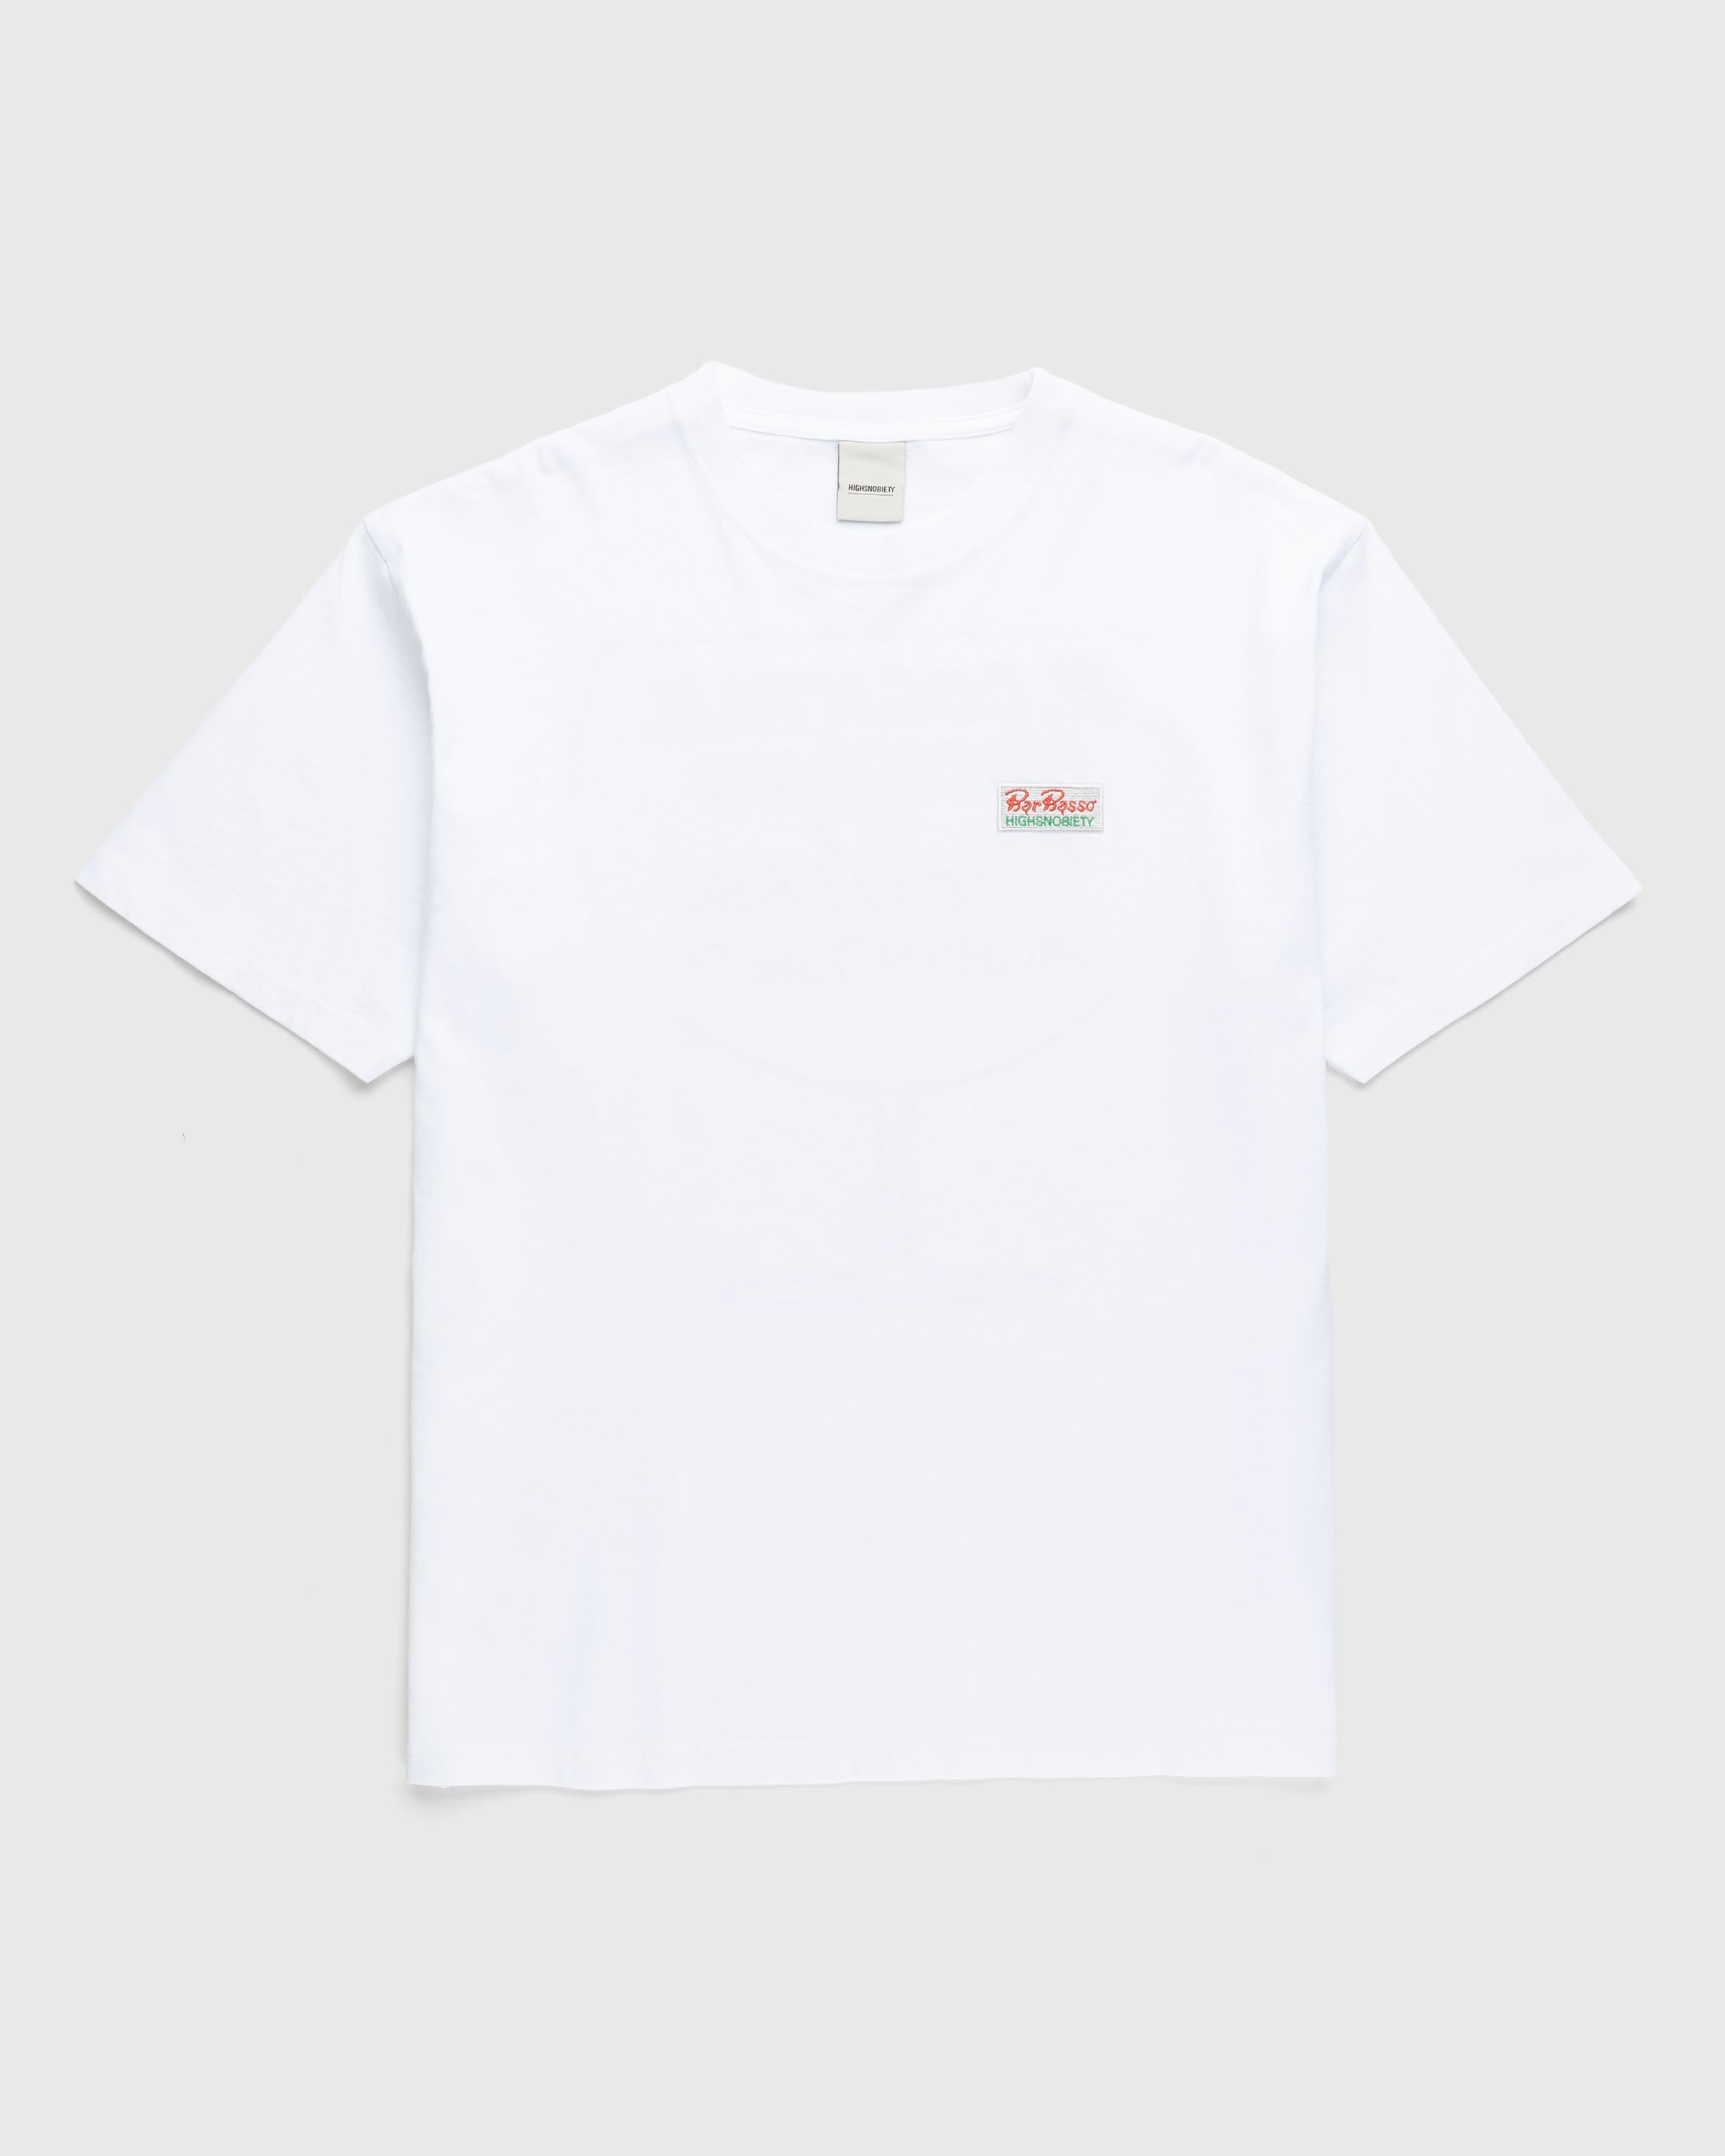 Bar Basso x Highsnobiety - Graphic T-Shirt White - Clothing - White - Image 2